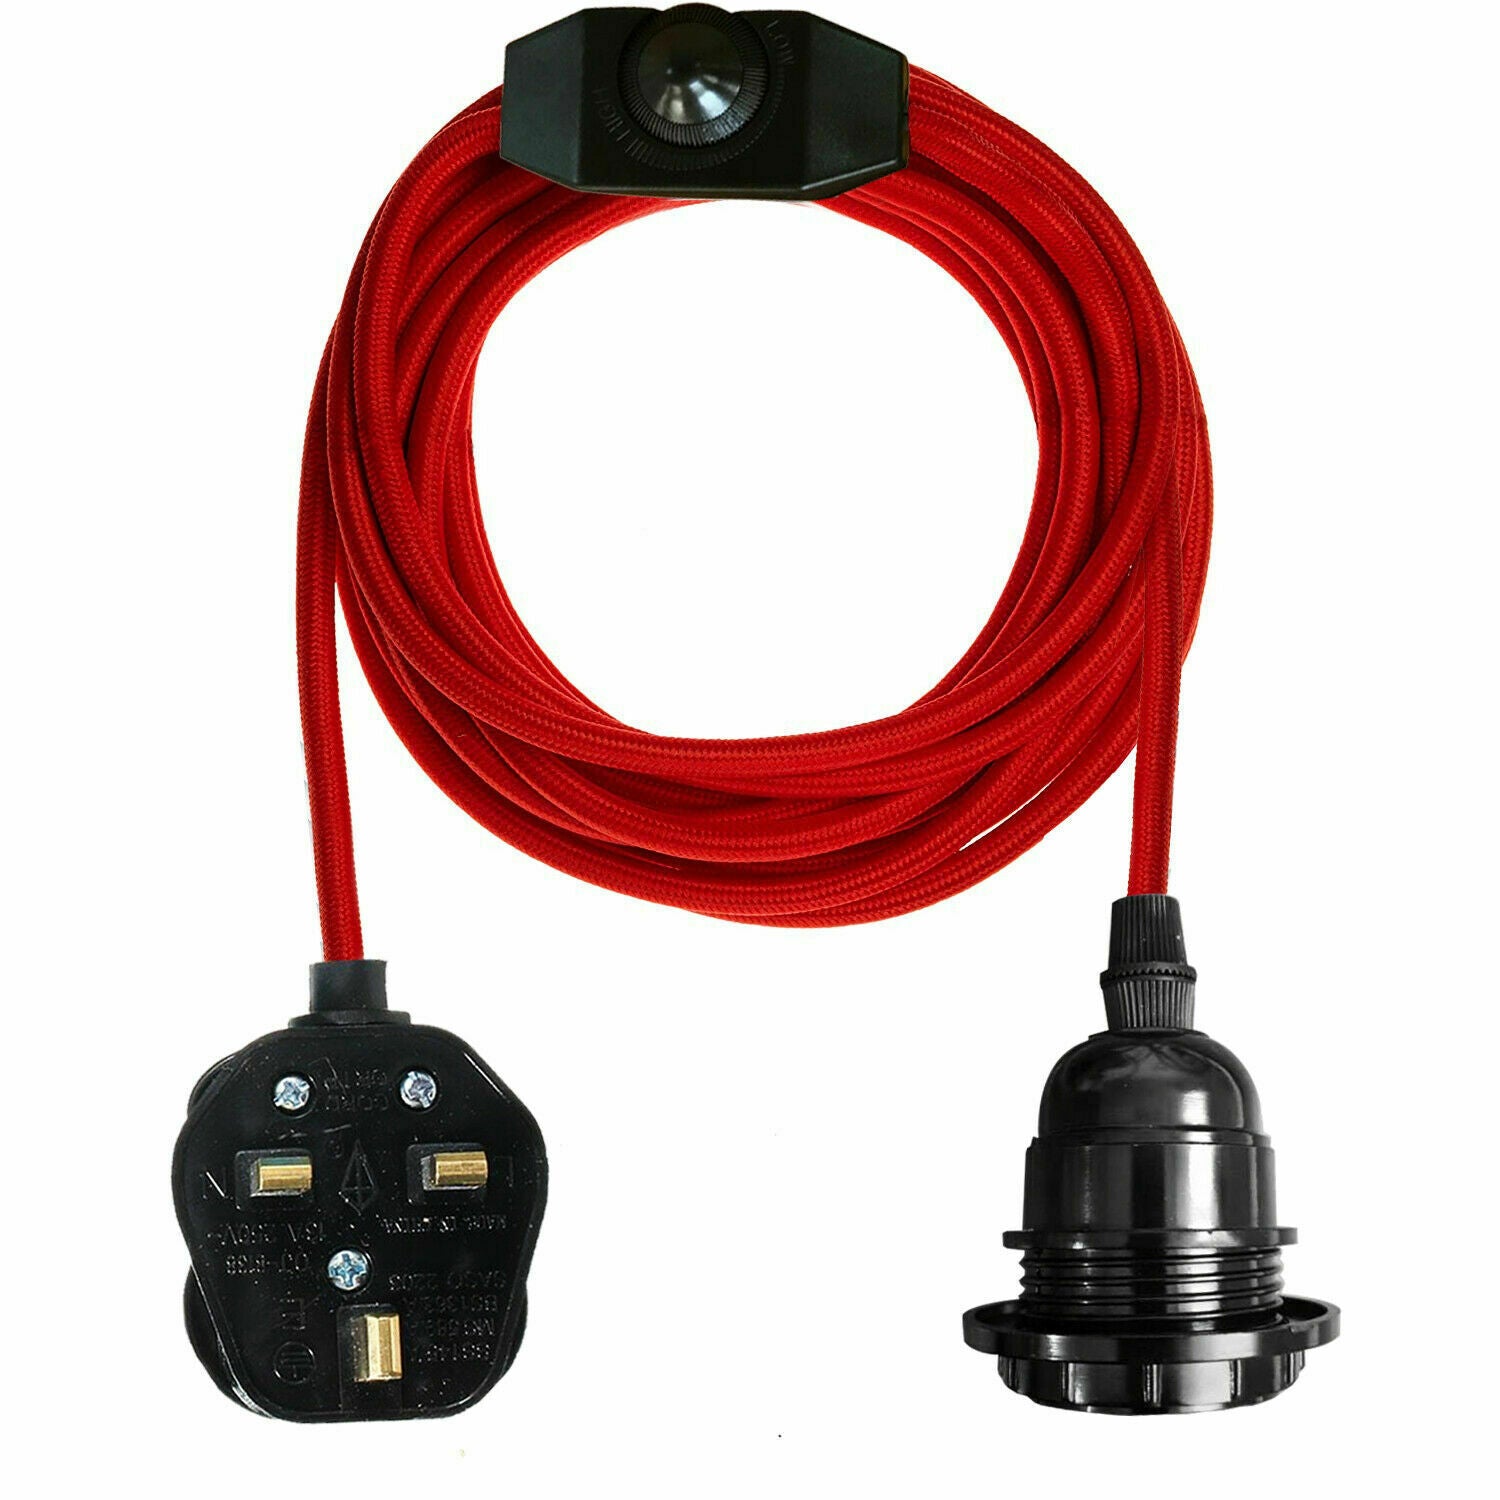  Red Plug In Pendant Lamp Bulb Holder